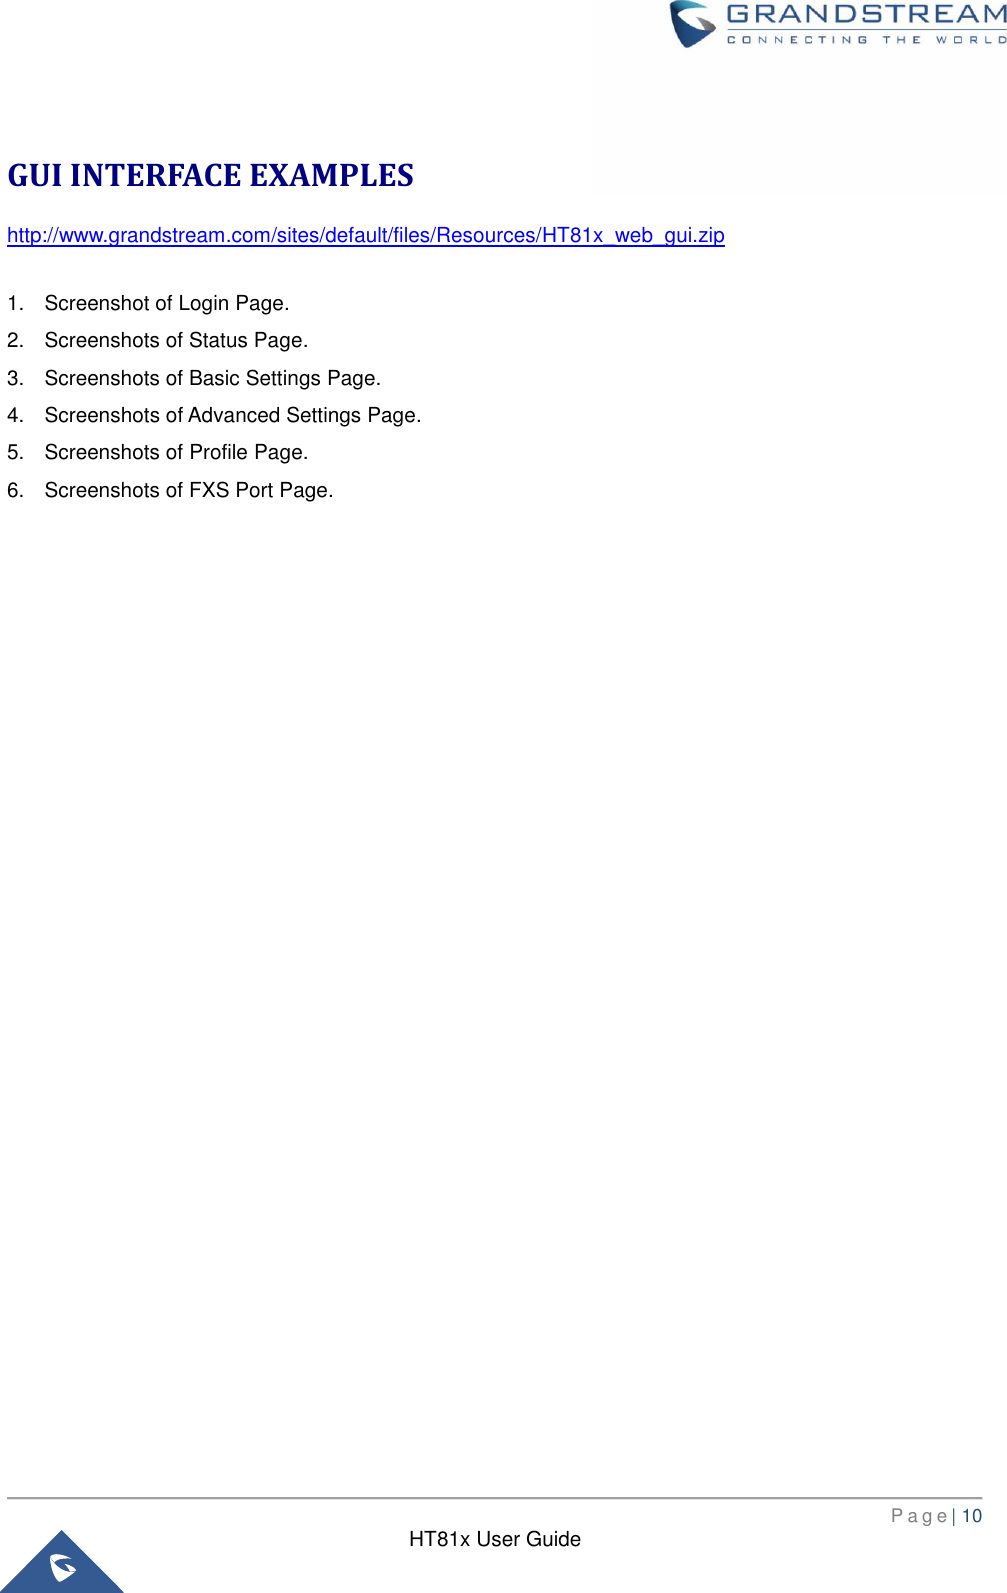       P a g e | 10      HT81x User Guide   GUI INTERFACE EXAMPLES http://www.grandstream.com/sites/default/files/Resources/HT81x_web_gui.zip  1.  Screenshot of Login Page. 2.  Screenshots of Status Page. 3.  Screenshots of Basic Settings Page. 4.  Screenshots of Advanced Settings Page. 5.  Screenshots of Profile Page. 6.  Screenshots of FXS Port Page.  